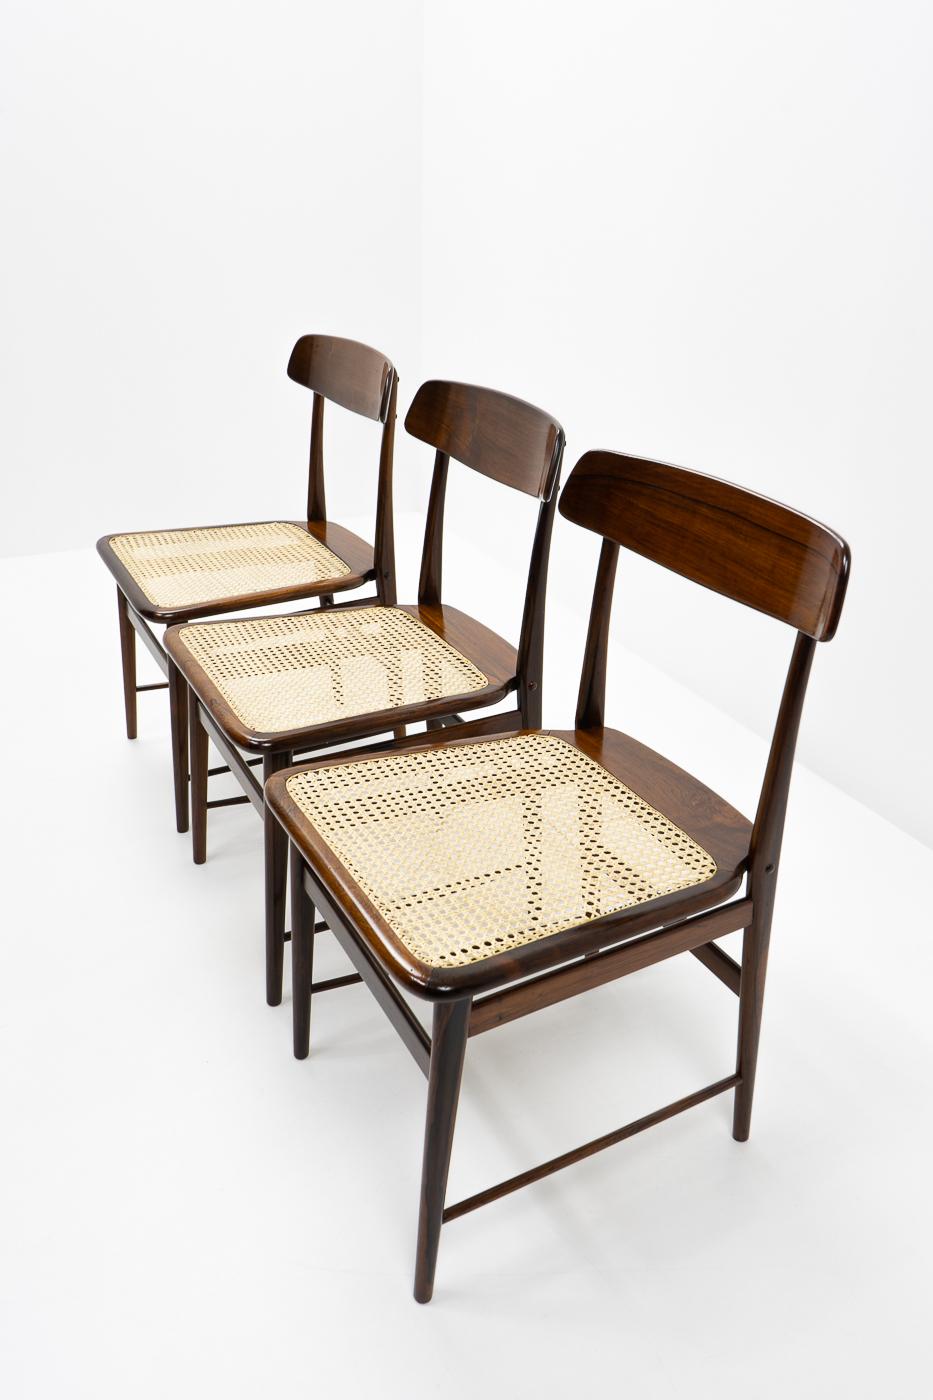 Mid-20th Century Original Design Sergio Rodrigues, Lucio Chairs for OCA Brazil, 1950s For Sale